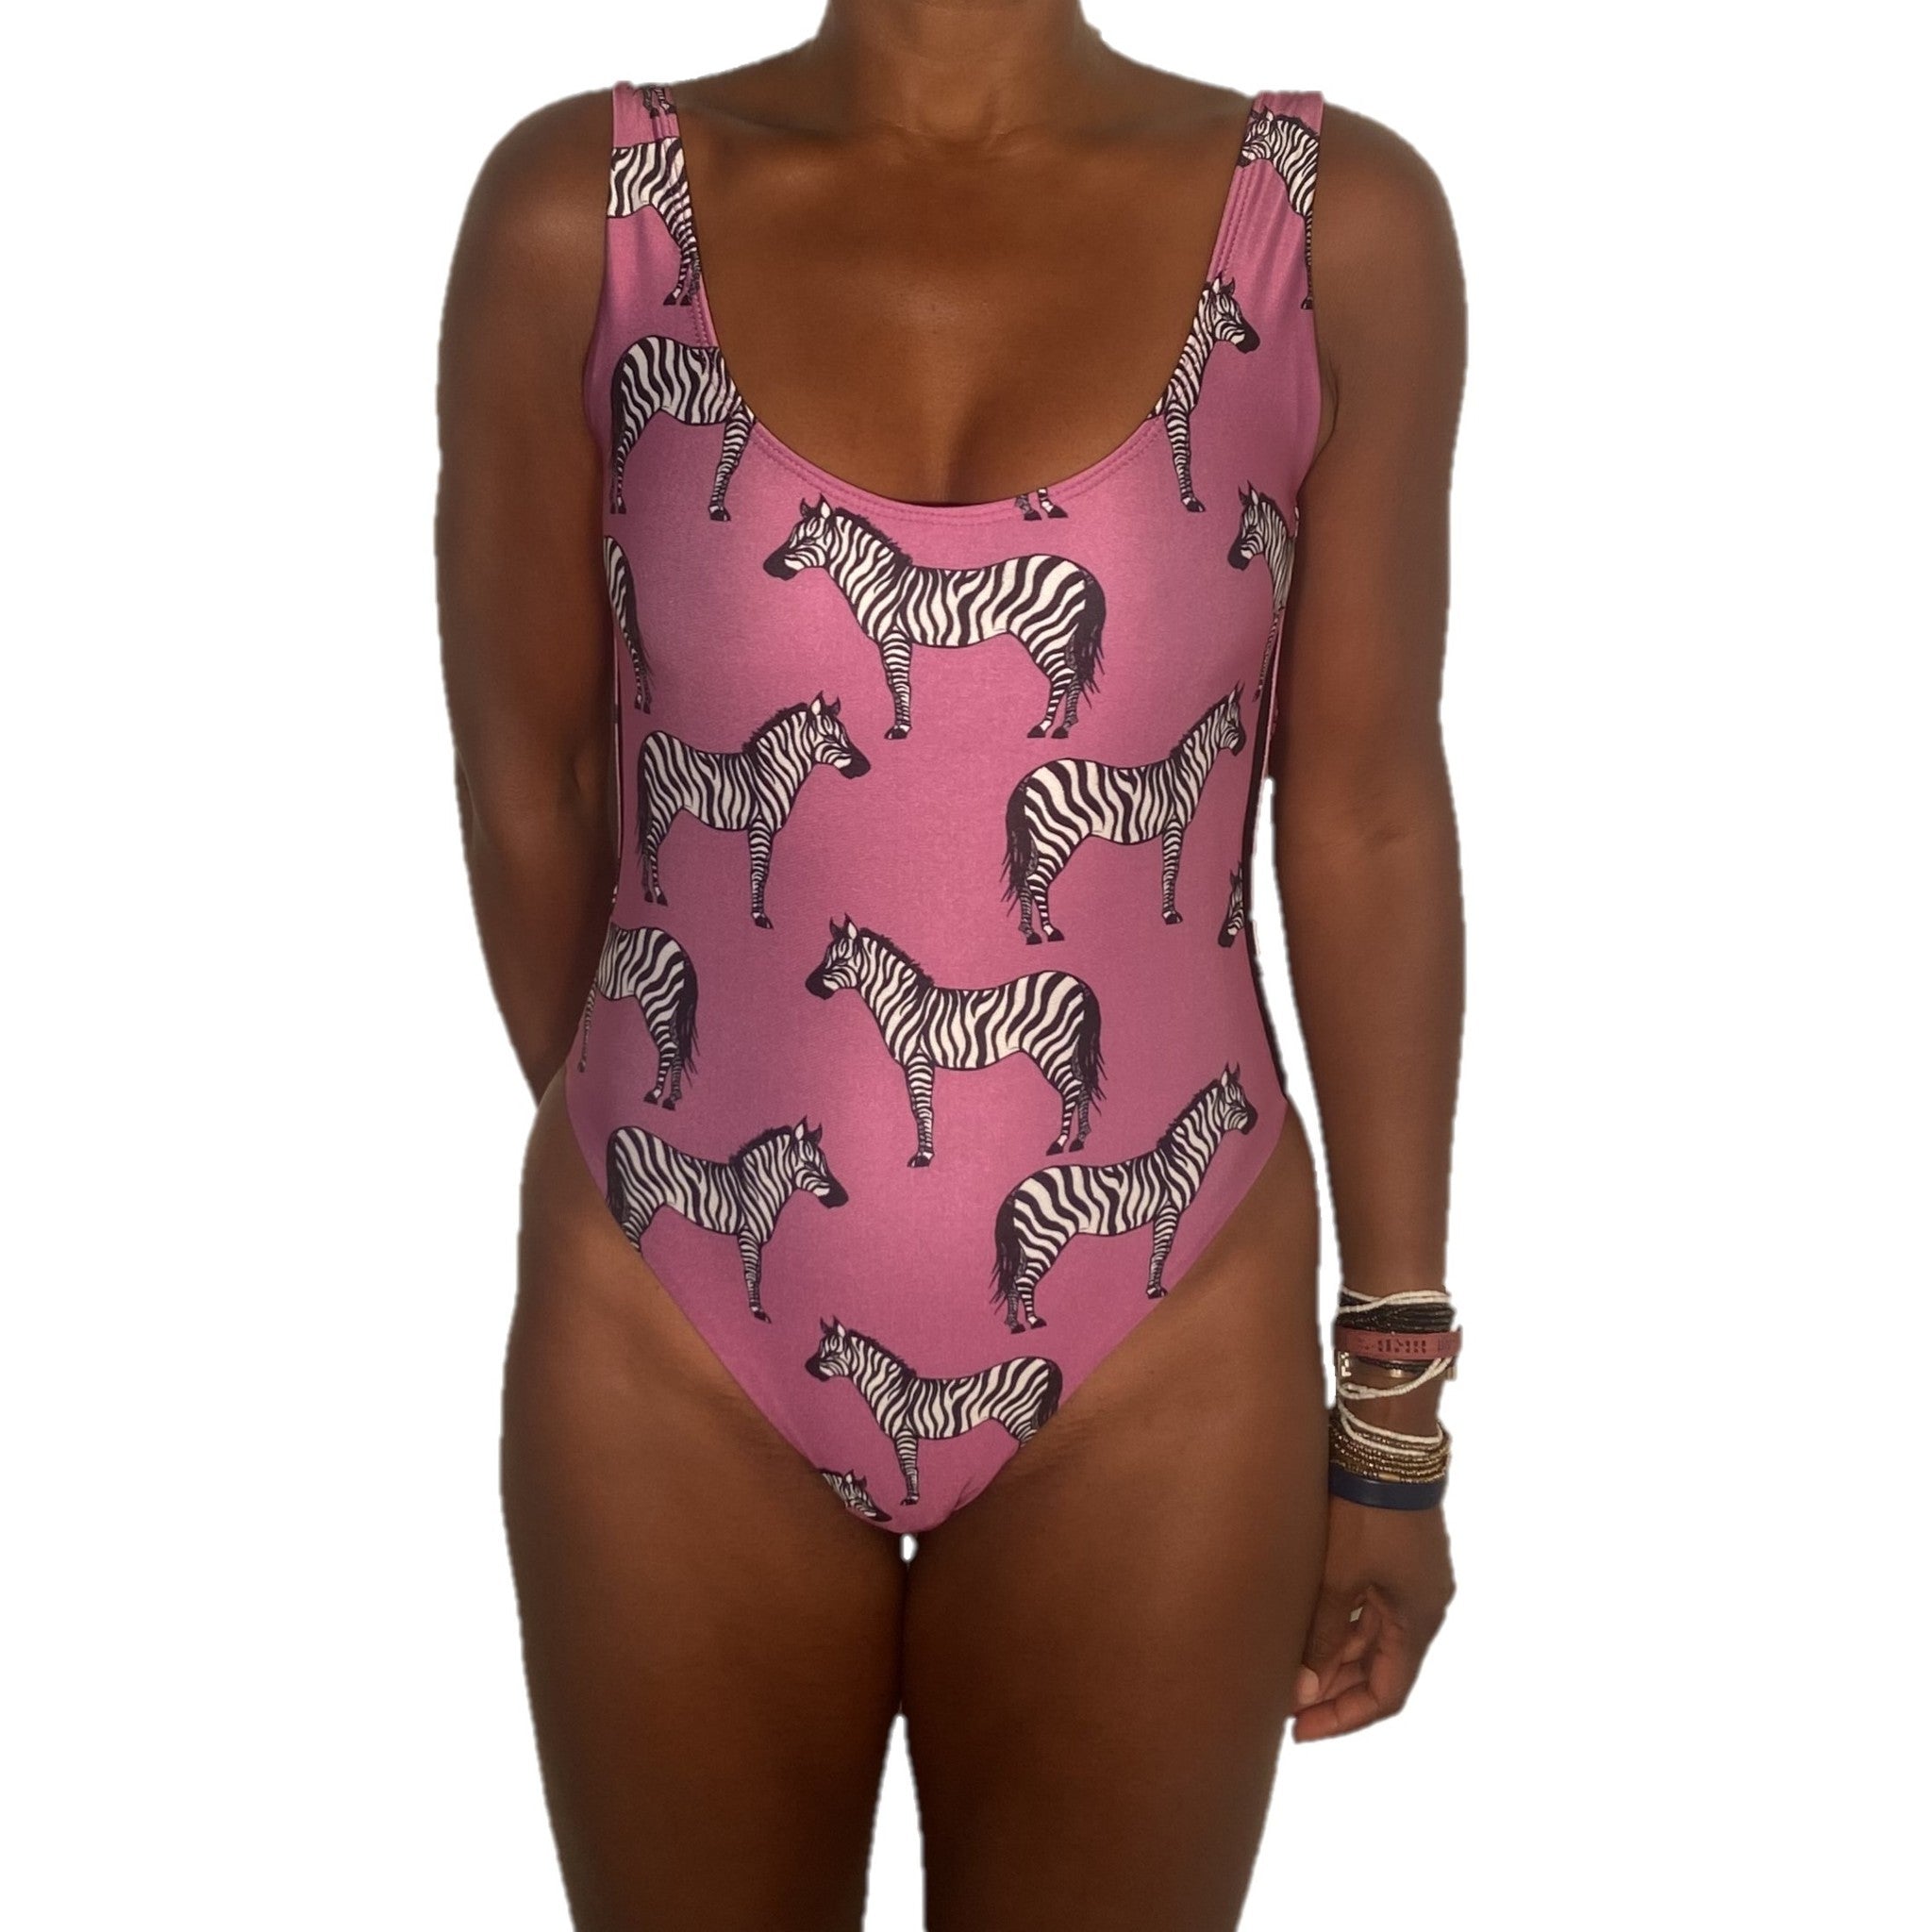 Laguna High Cut One Piece Swimsuit with Mesh Sides - Zebra Print